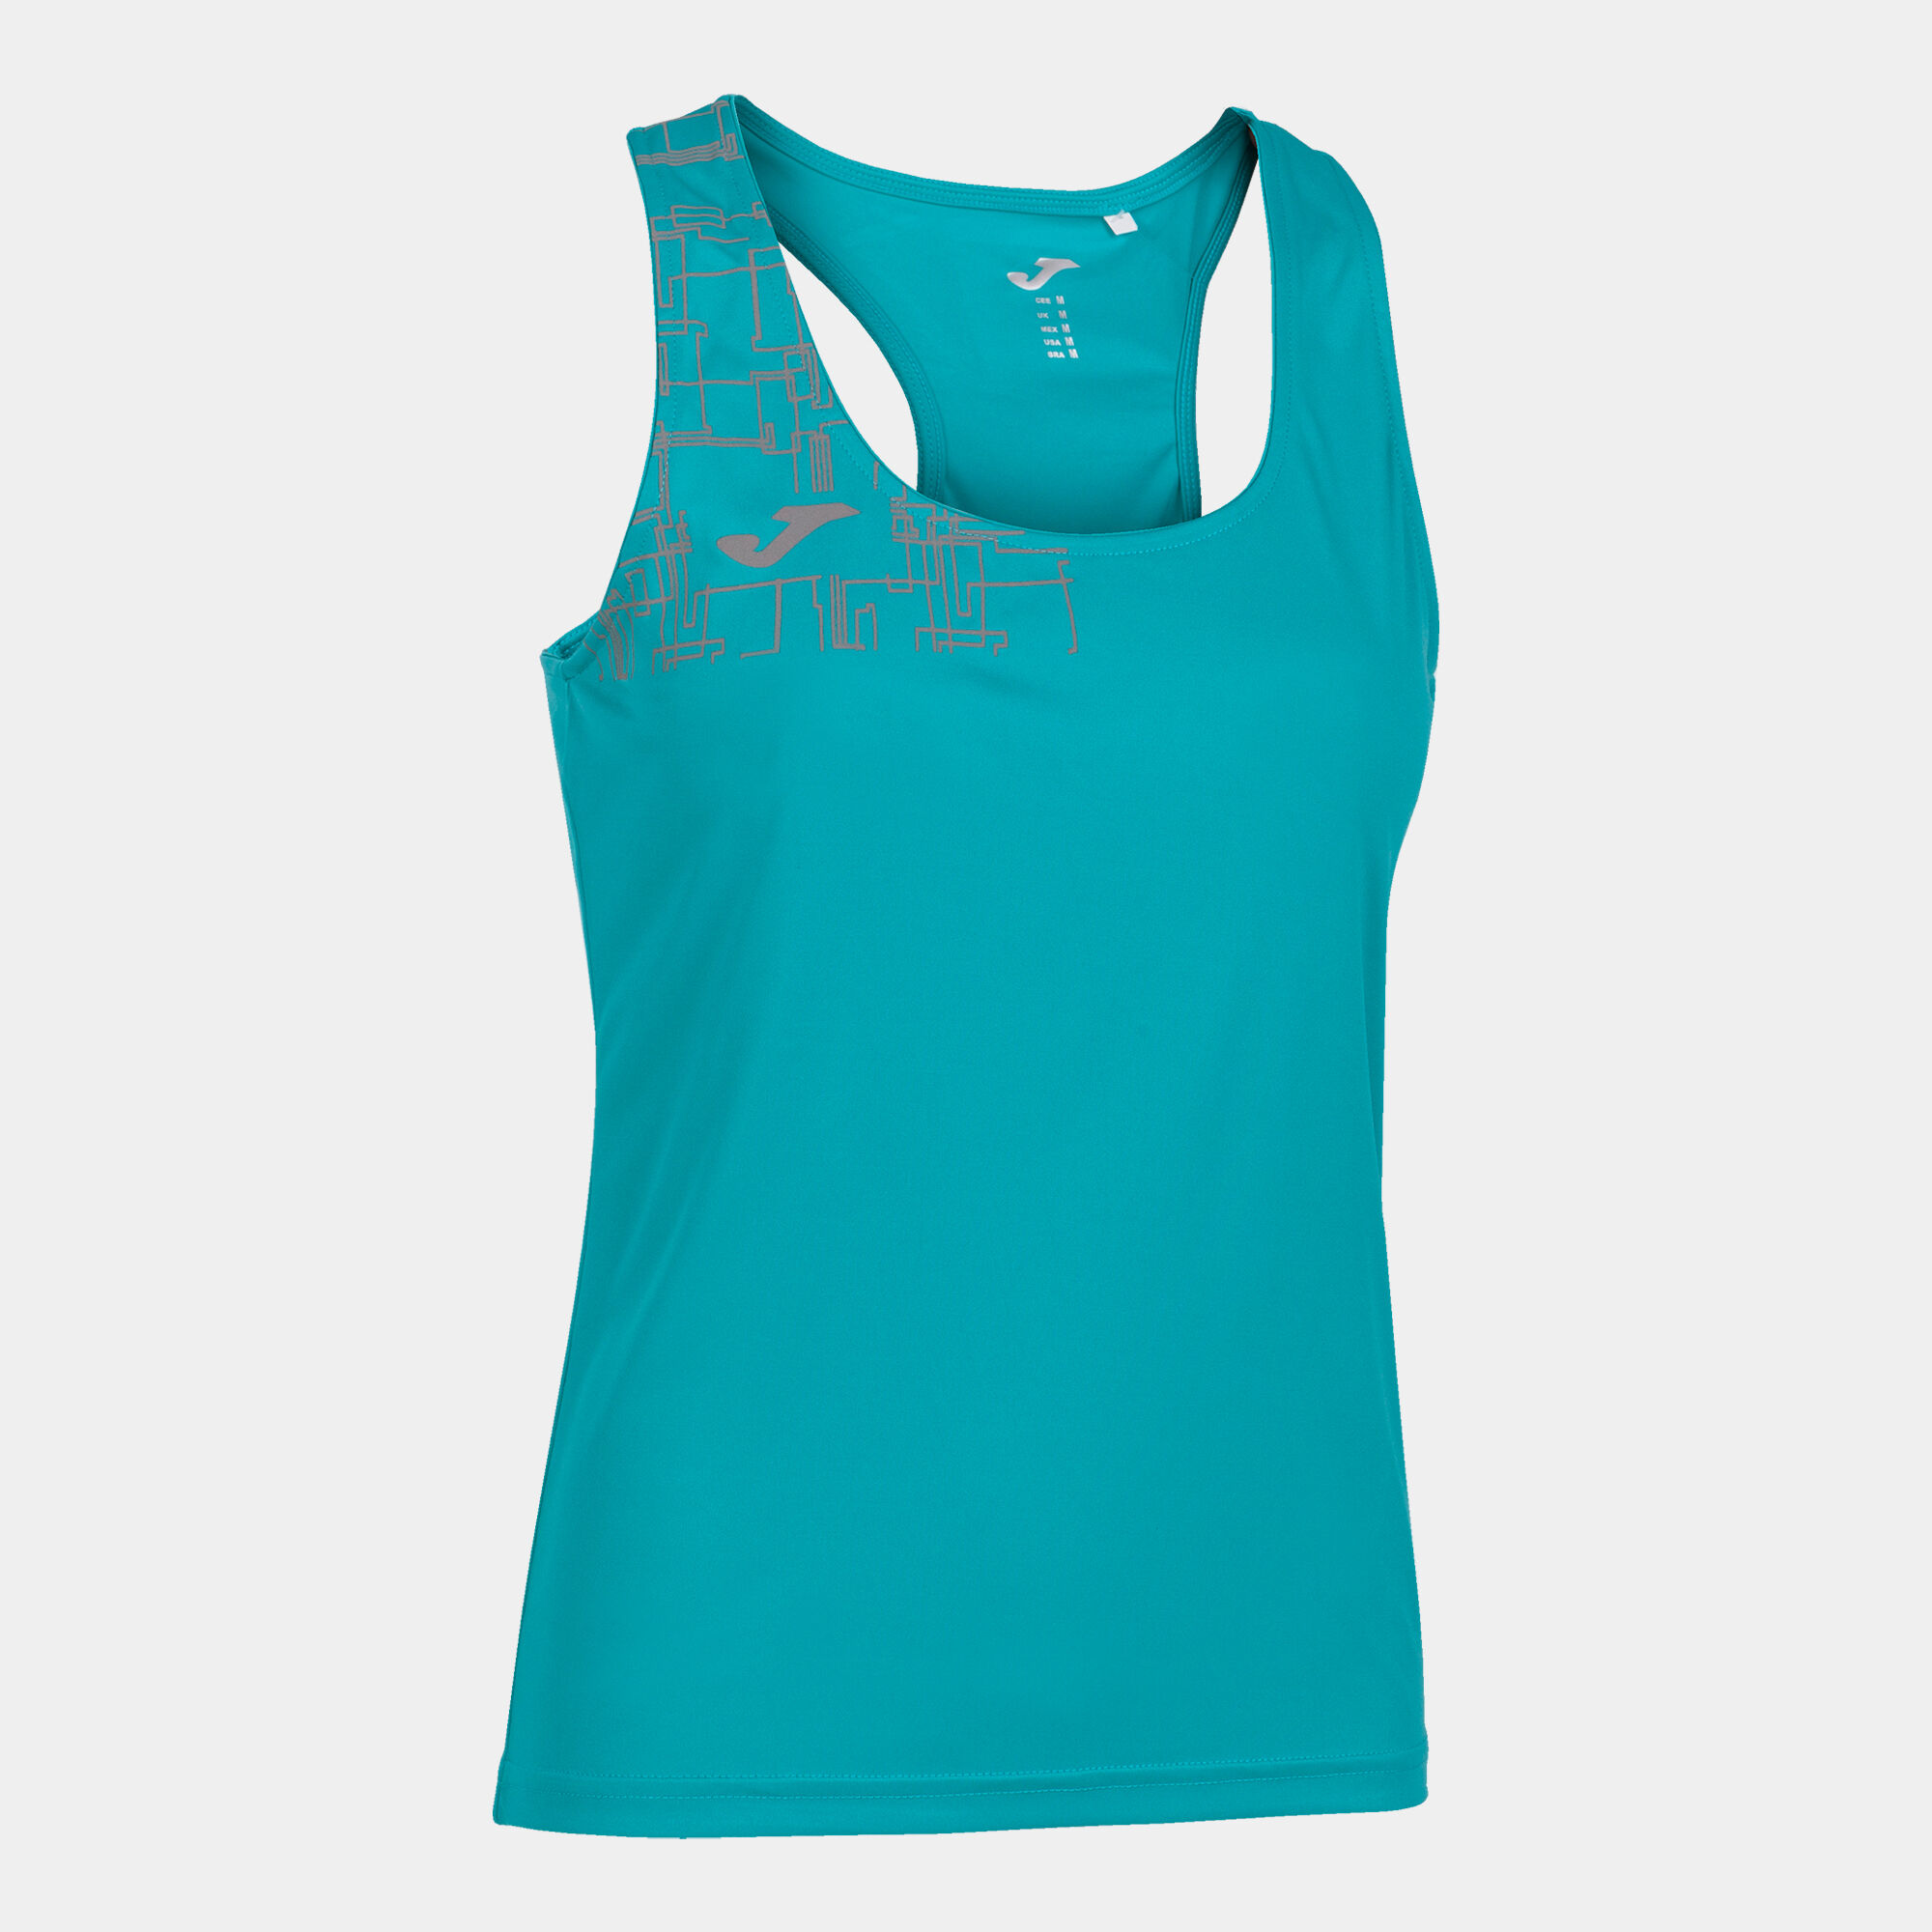 T-shirt de alça mulher Elite VIII azul-turquesa